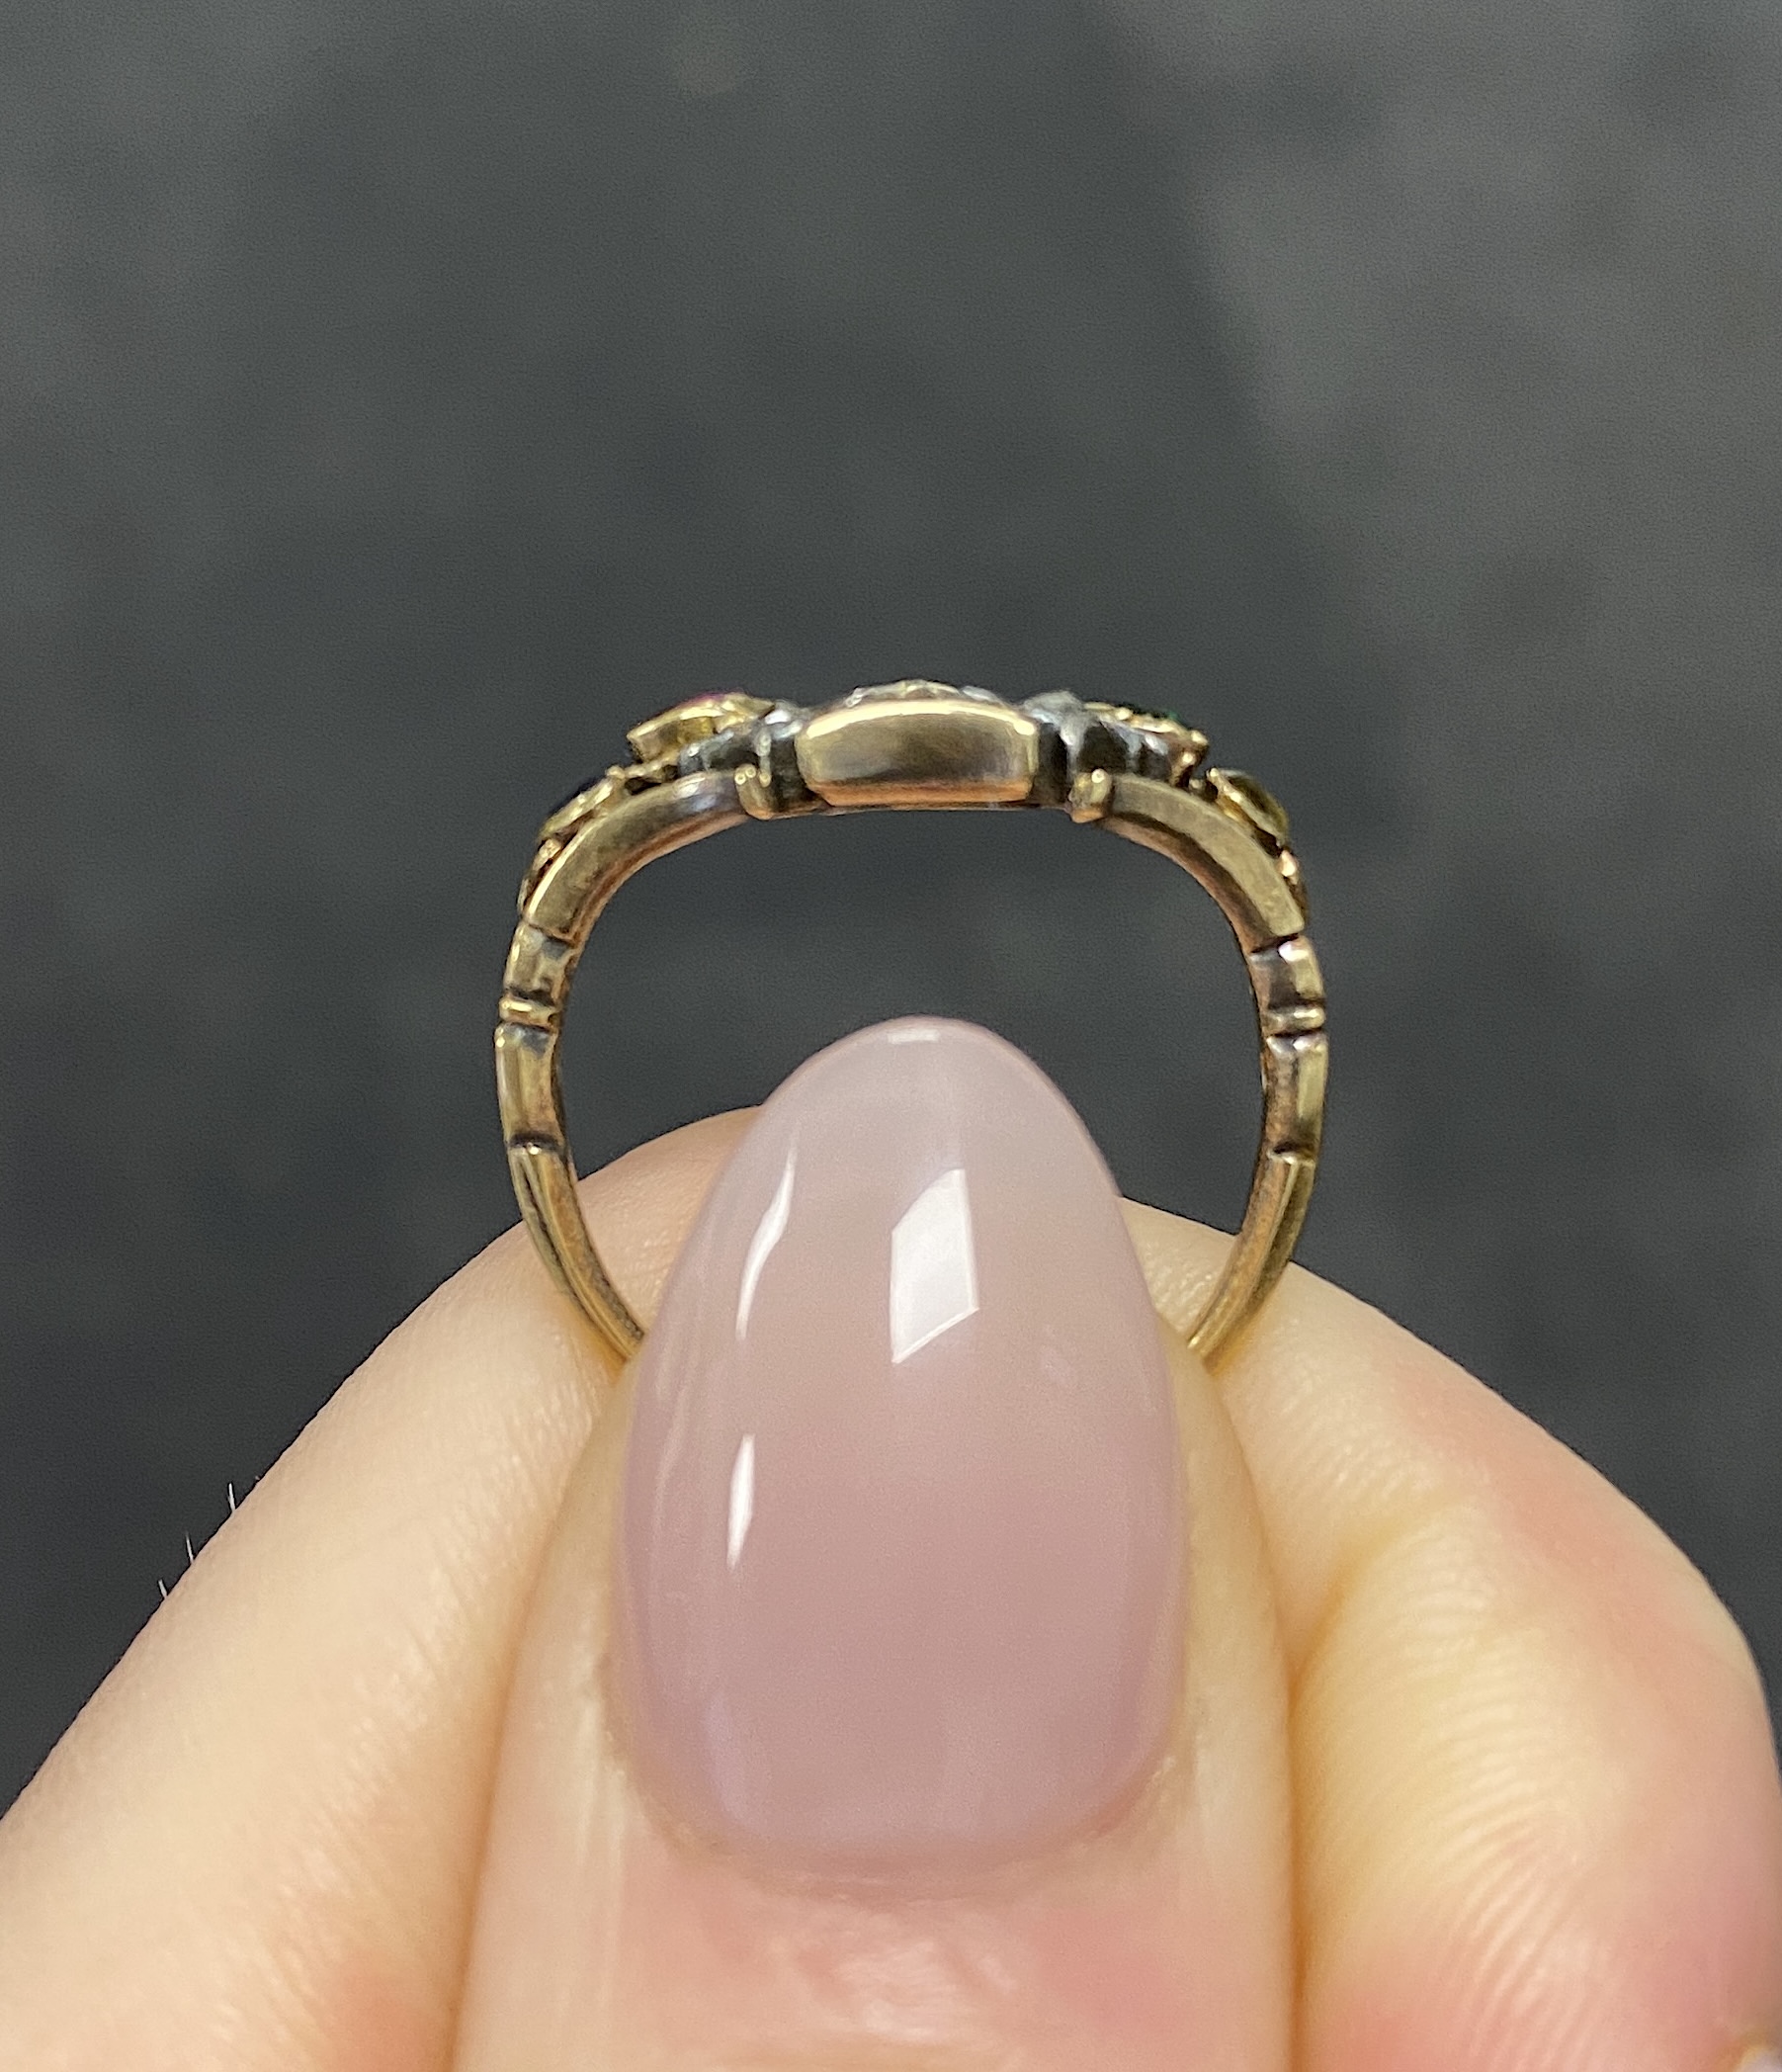 An 18th century gem-set giardinetto ring - Image 5 of 6